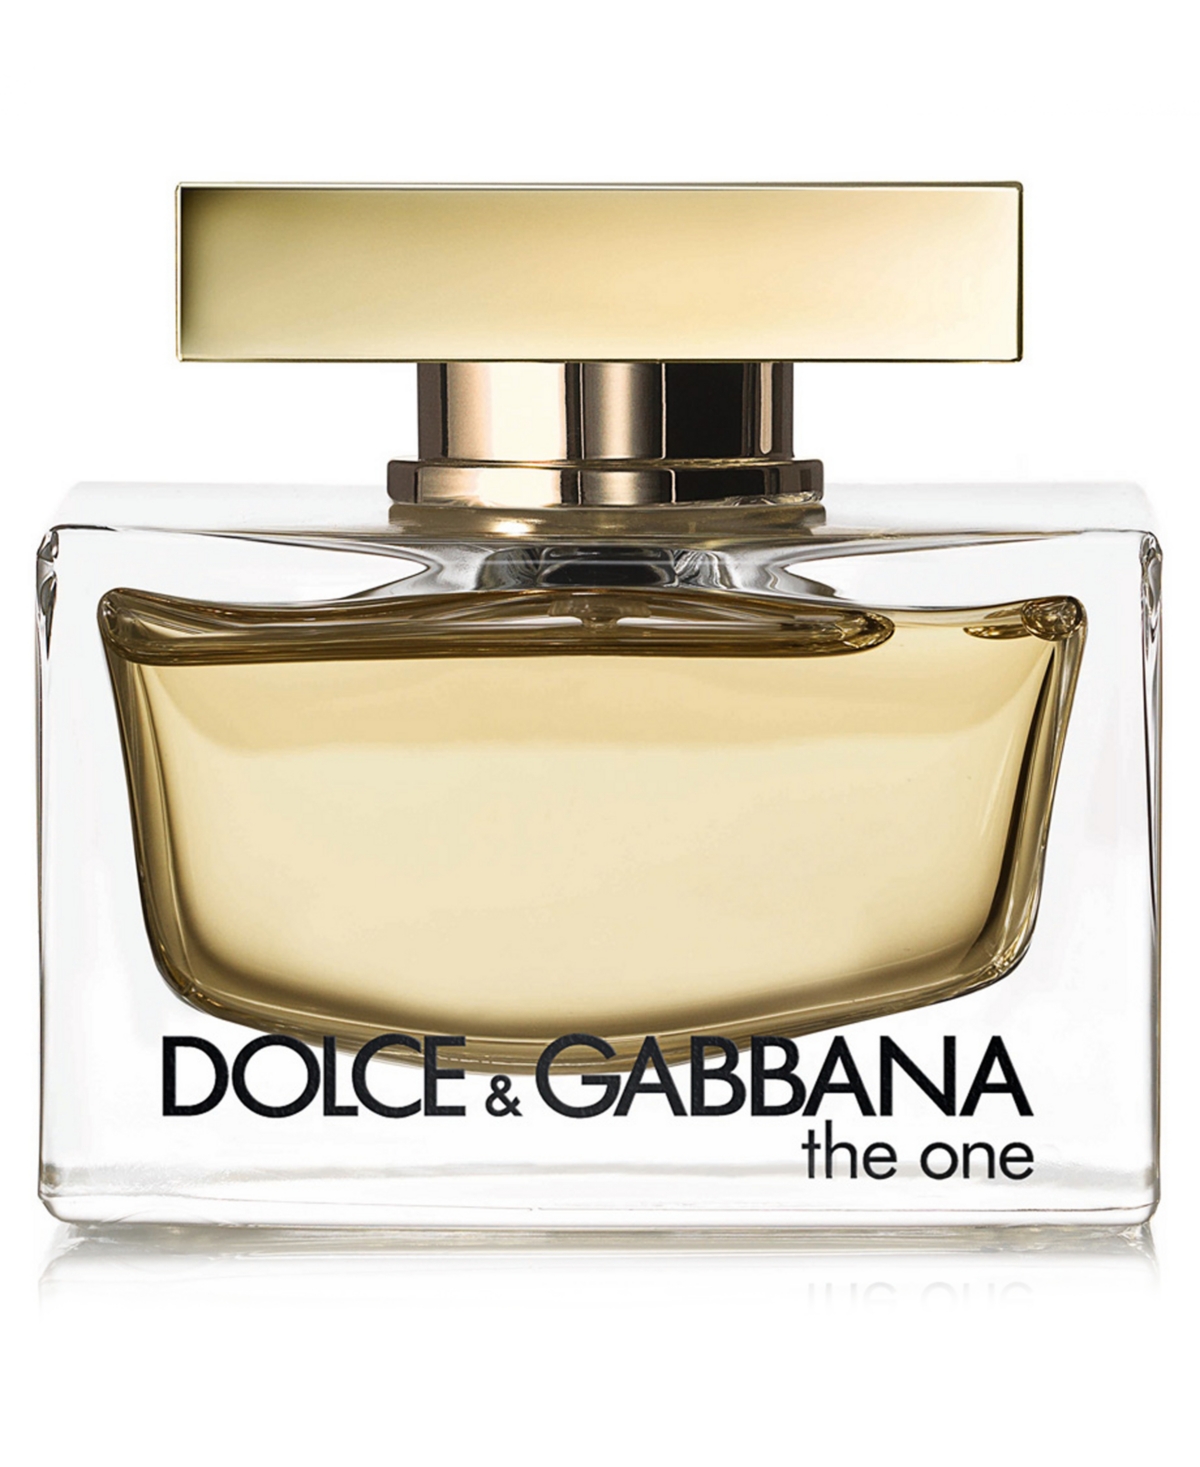 Postbode Ongewijzigd Intact Dolce&Gabbana The One Eau de Parfum, 2.5 oz & Reviews - Perfume - Beauty -  Macy's